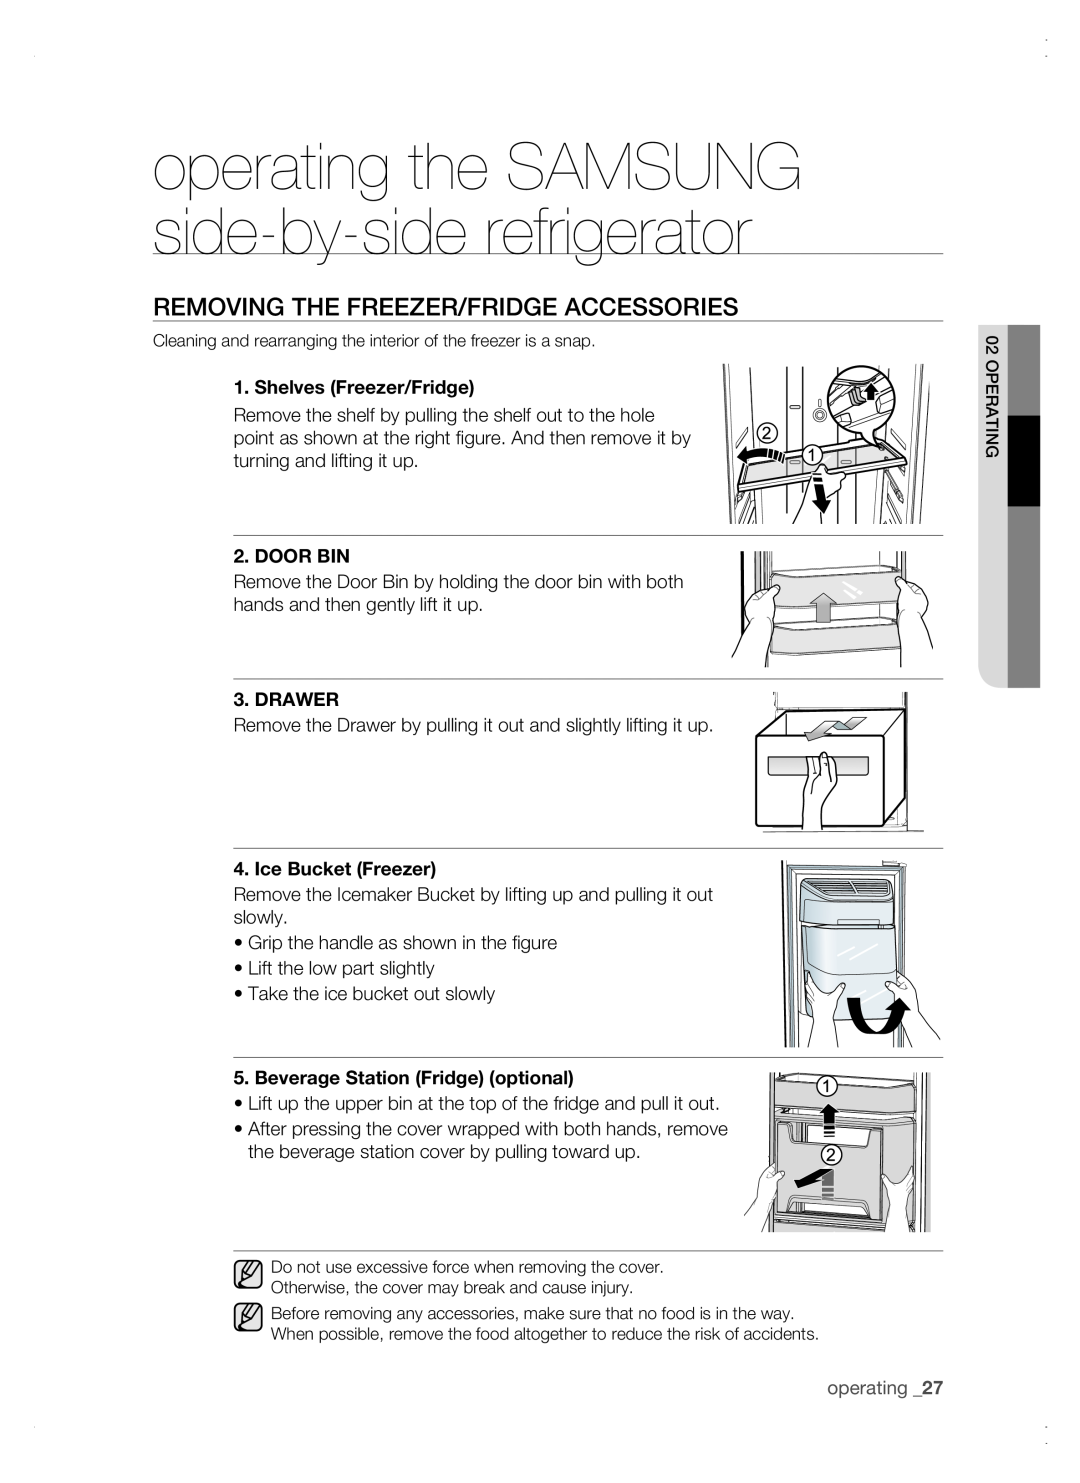 Samsung RSG5 Removing The Freezer/Fridge Accessories, Shelves Freezer/Fridge, Door Bin, Drawer, Ice Bucket Freezer 